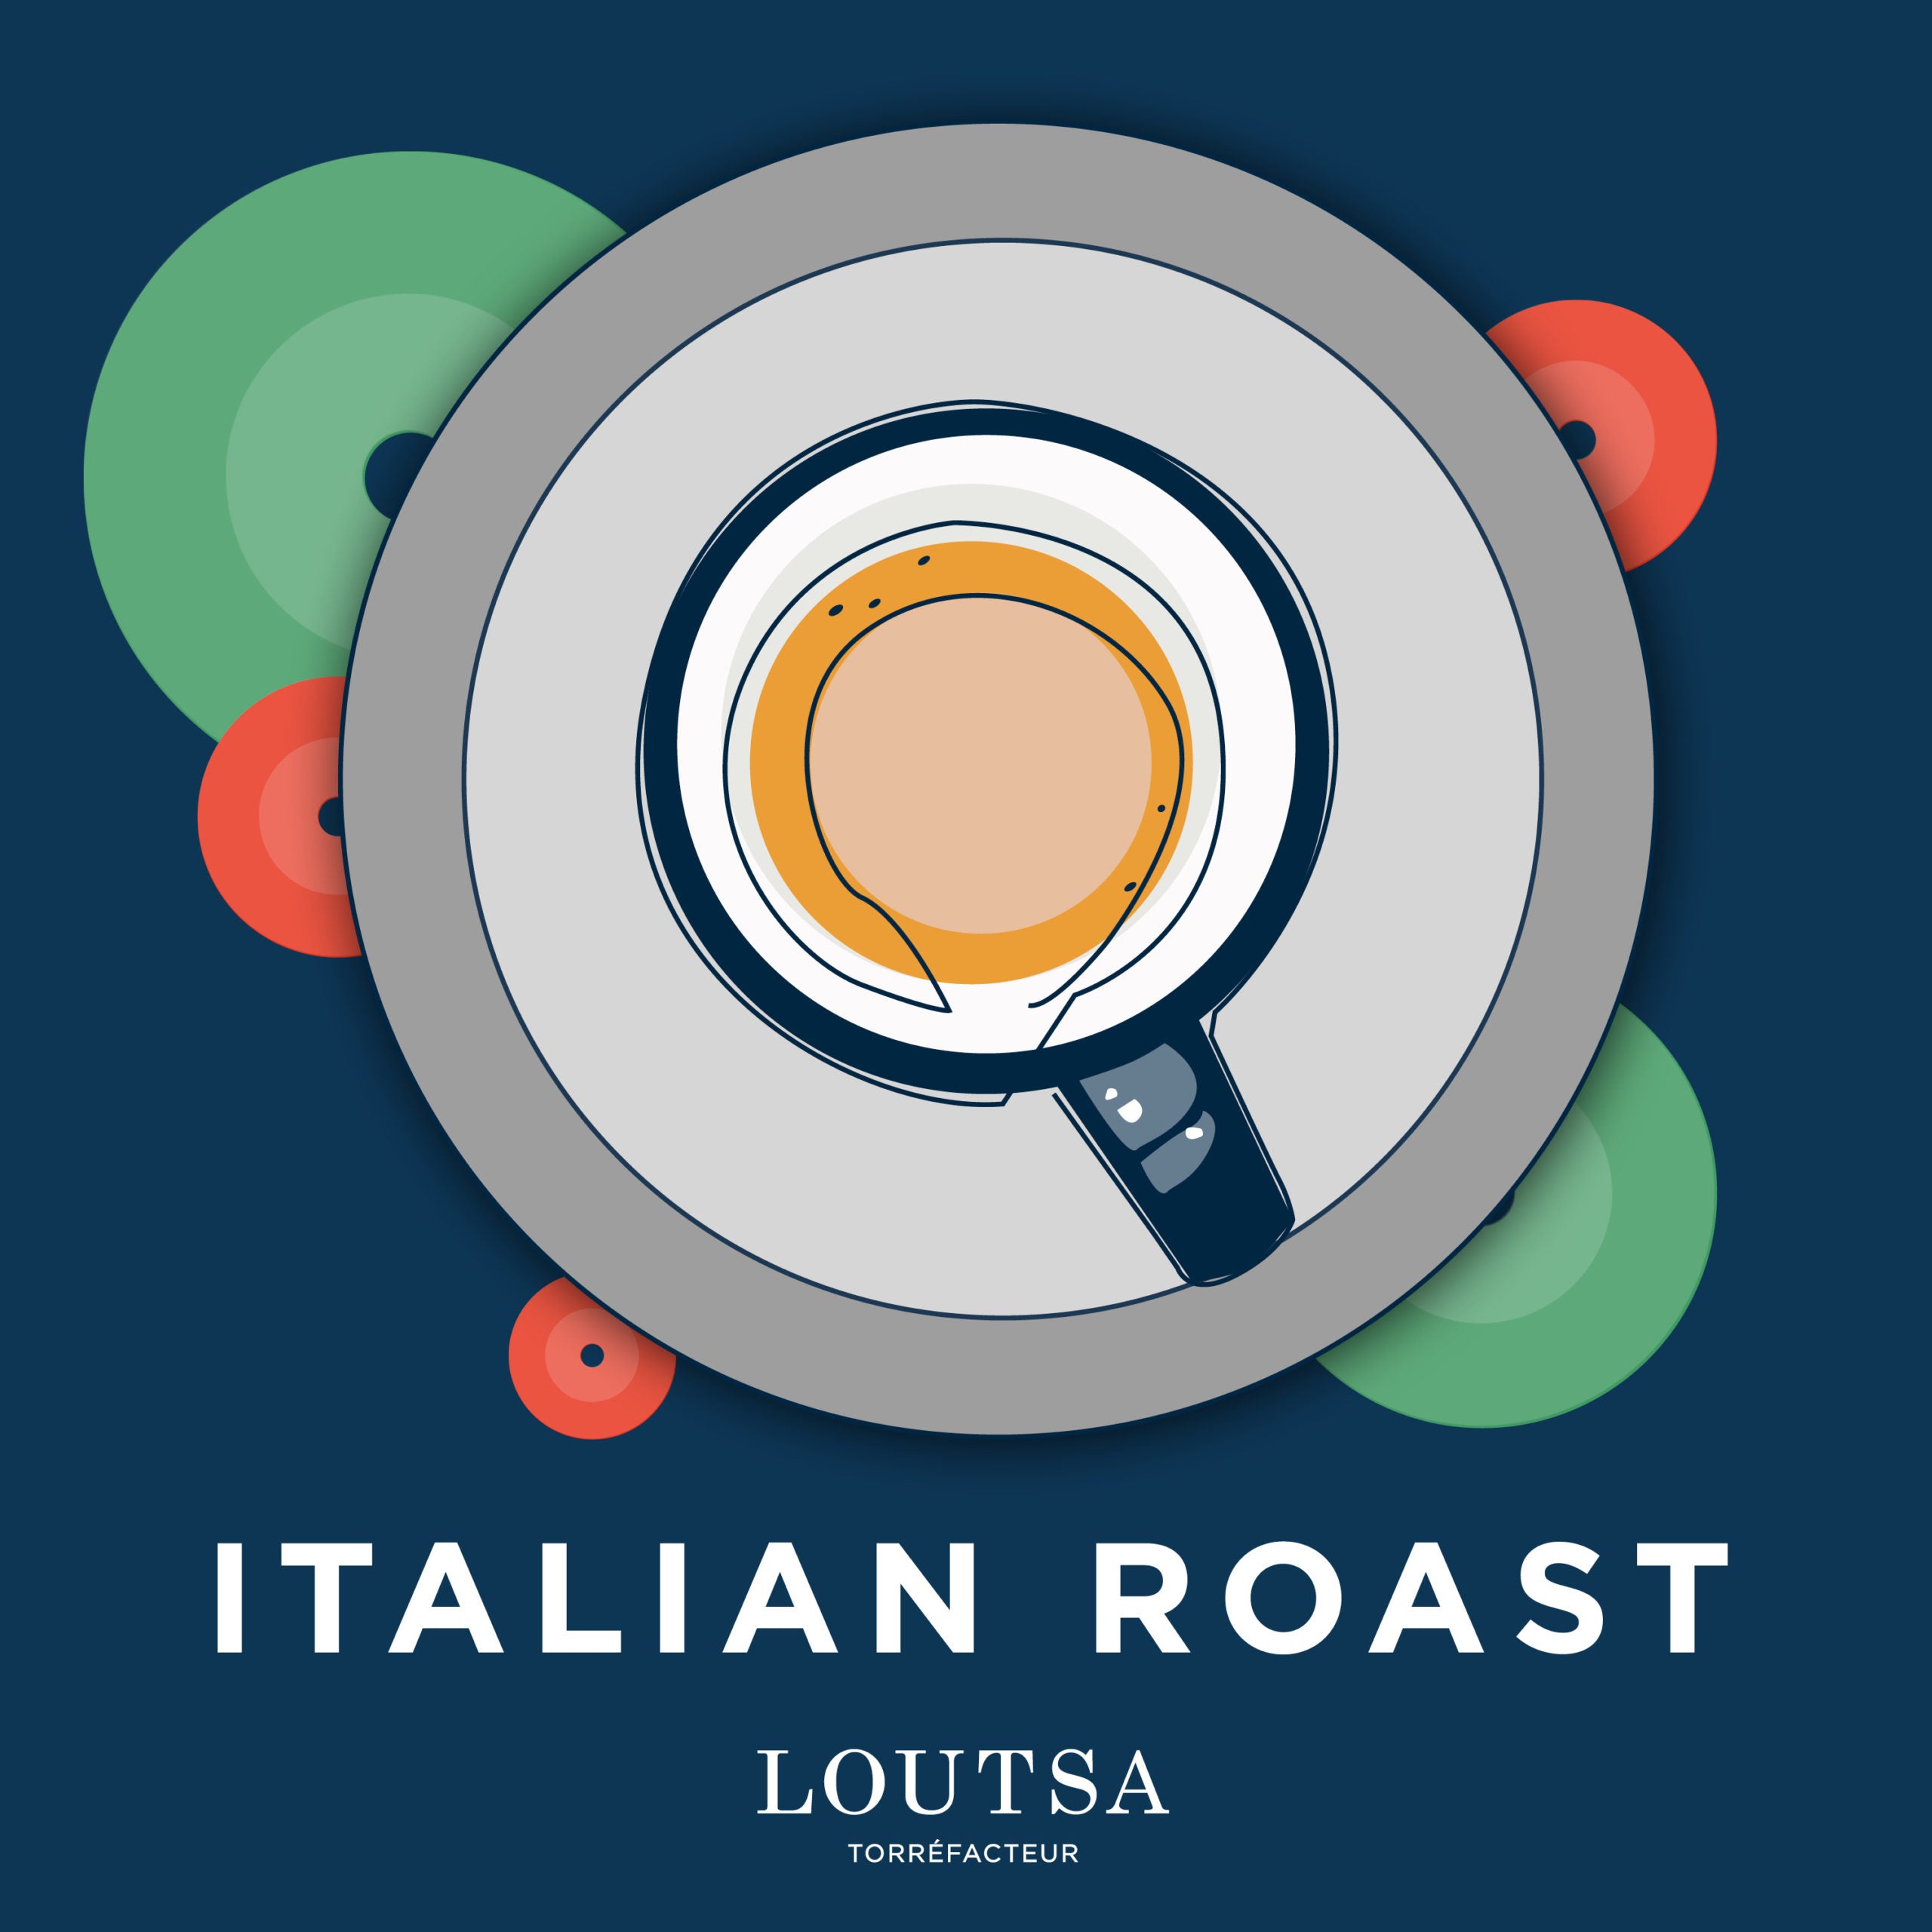 L’Italian Roast, notre nouveau café signature